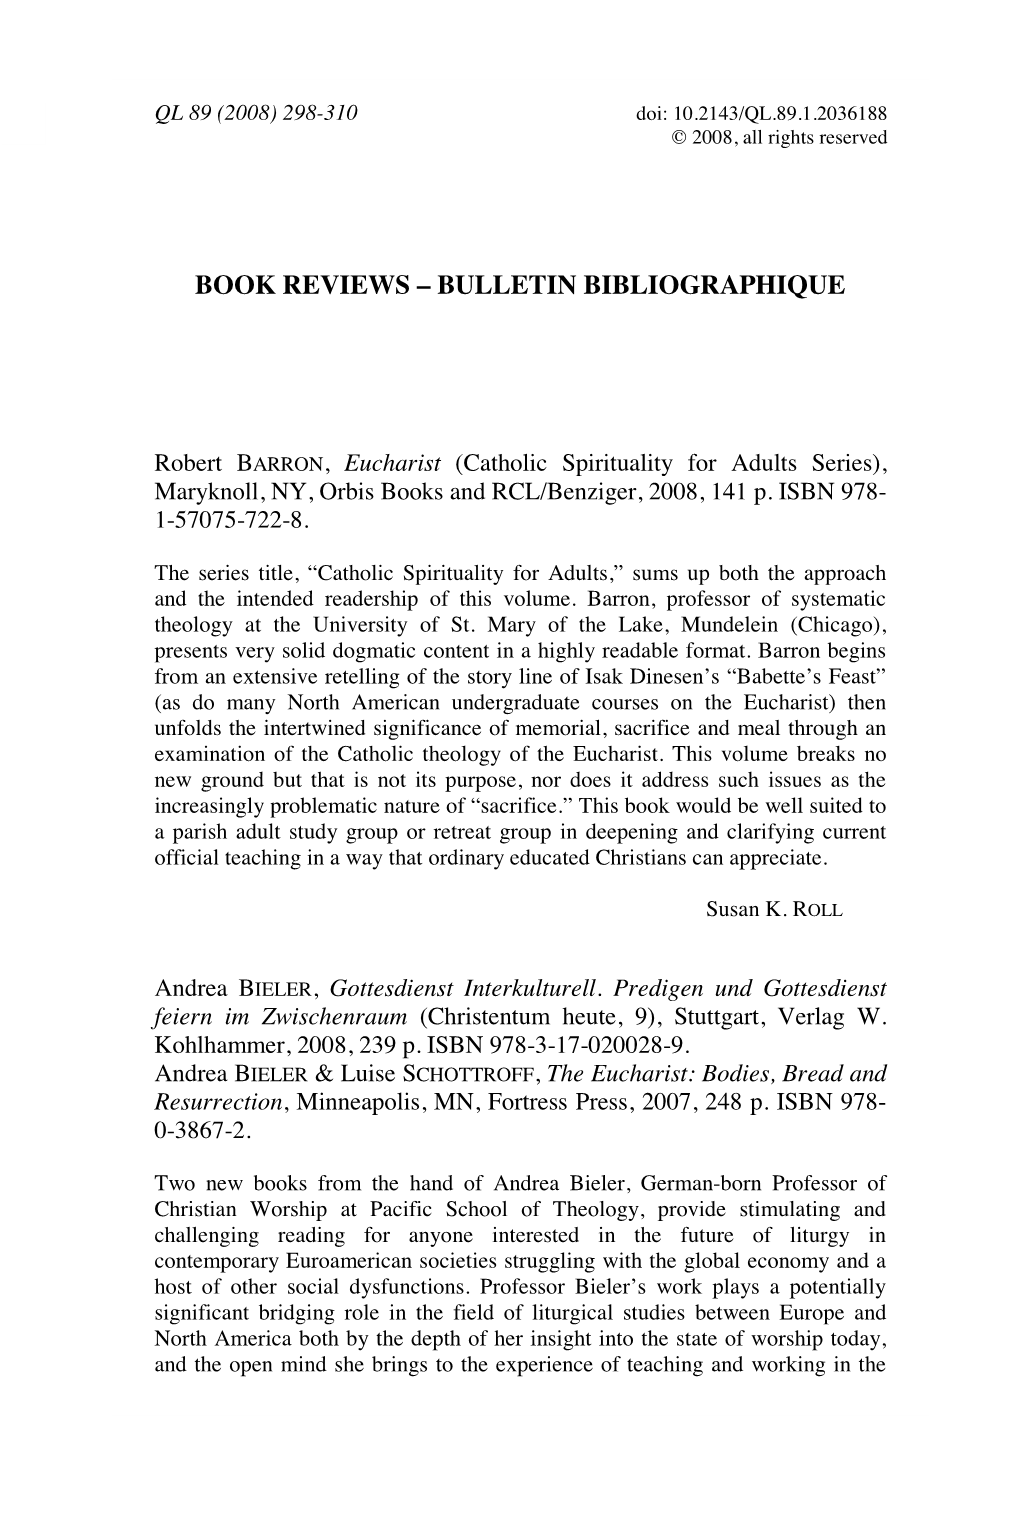 Book Reviews – Bulletin Bibliographique